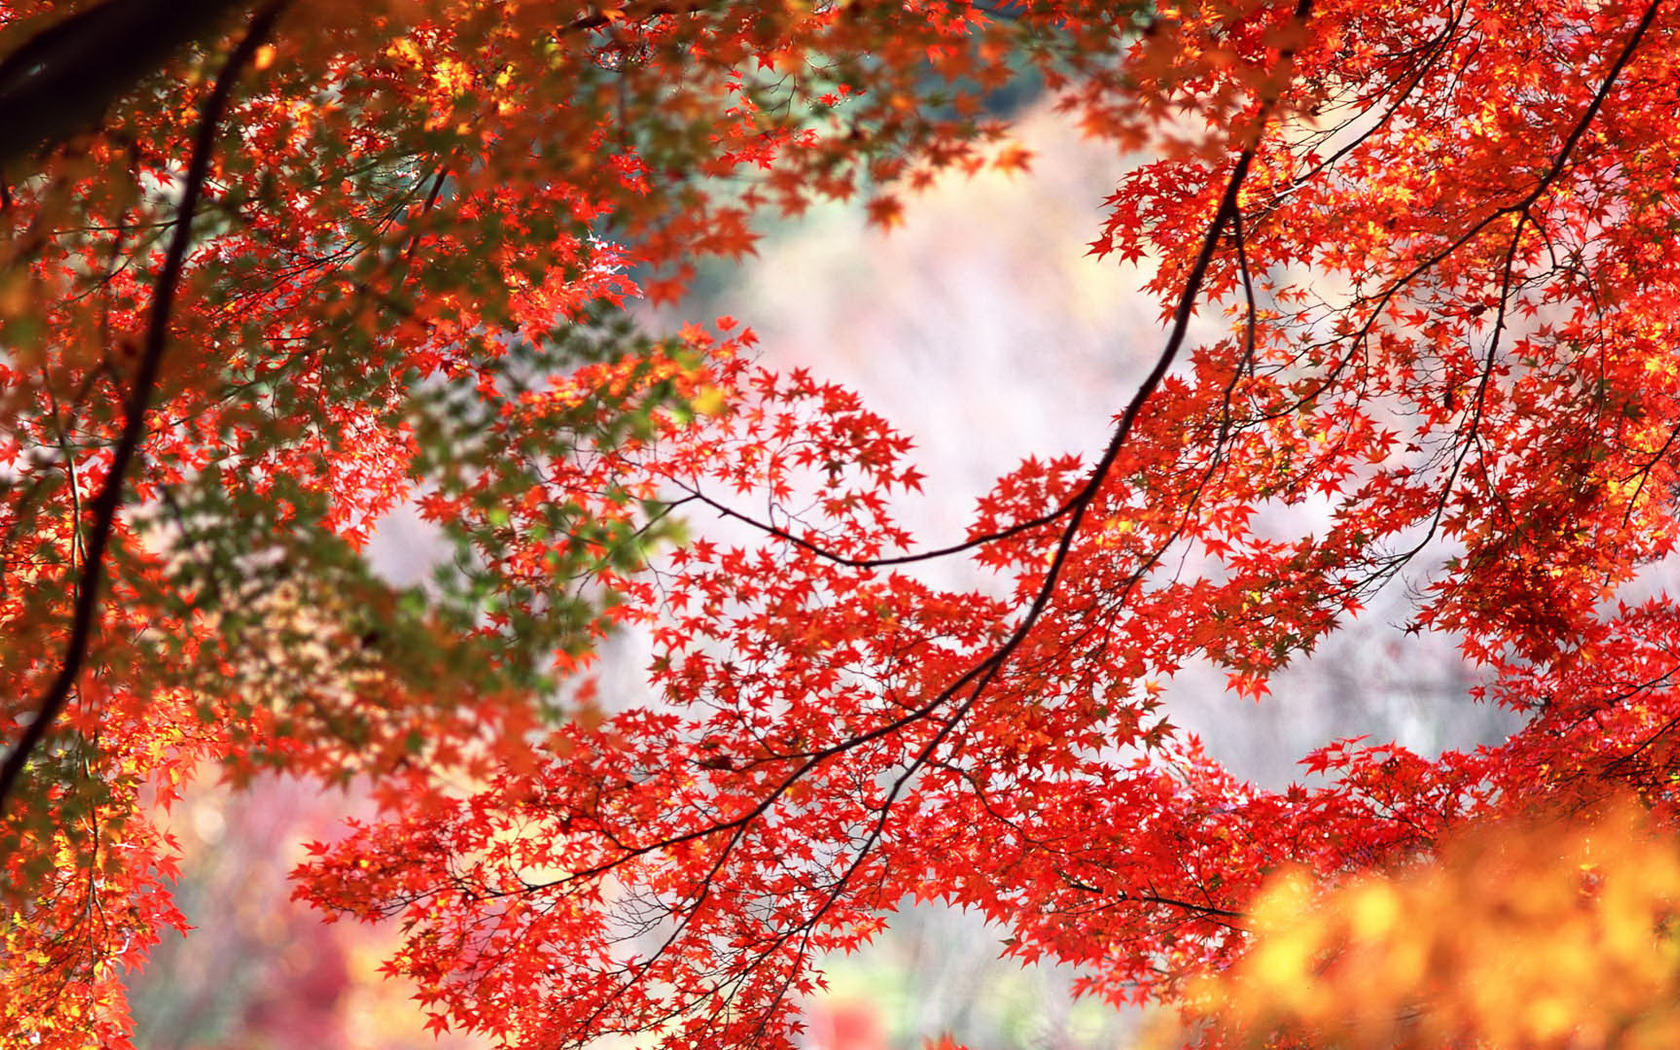 Red Maple Leaves Wallpaper